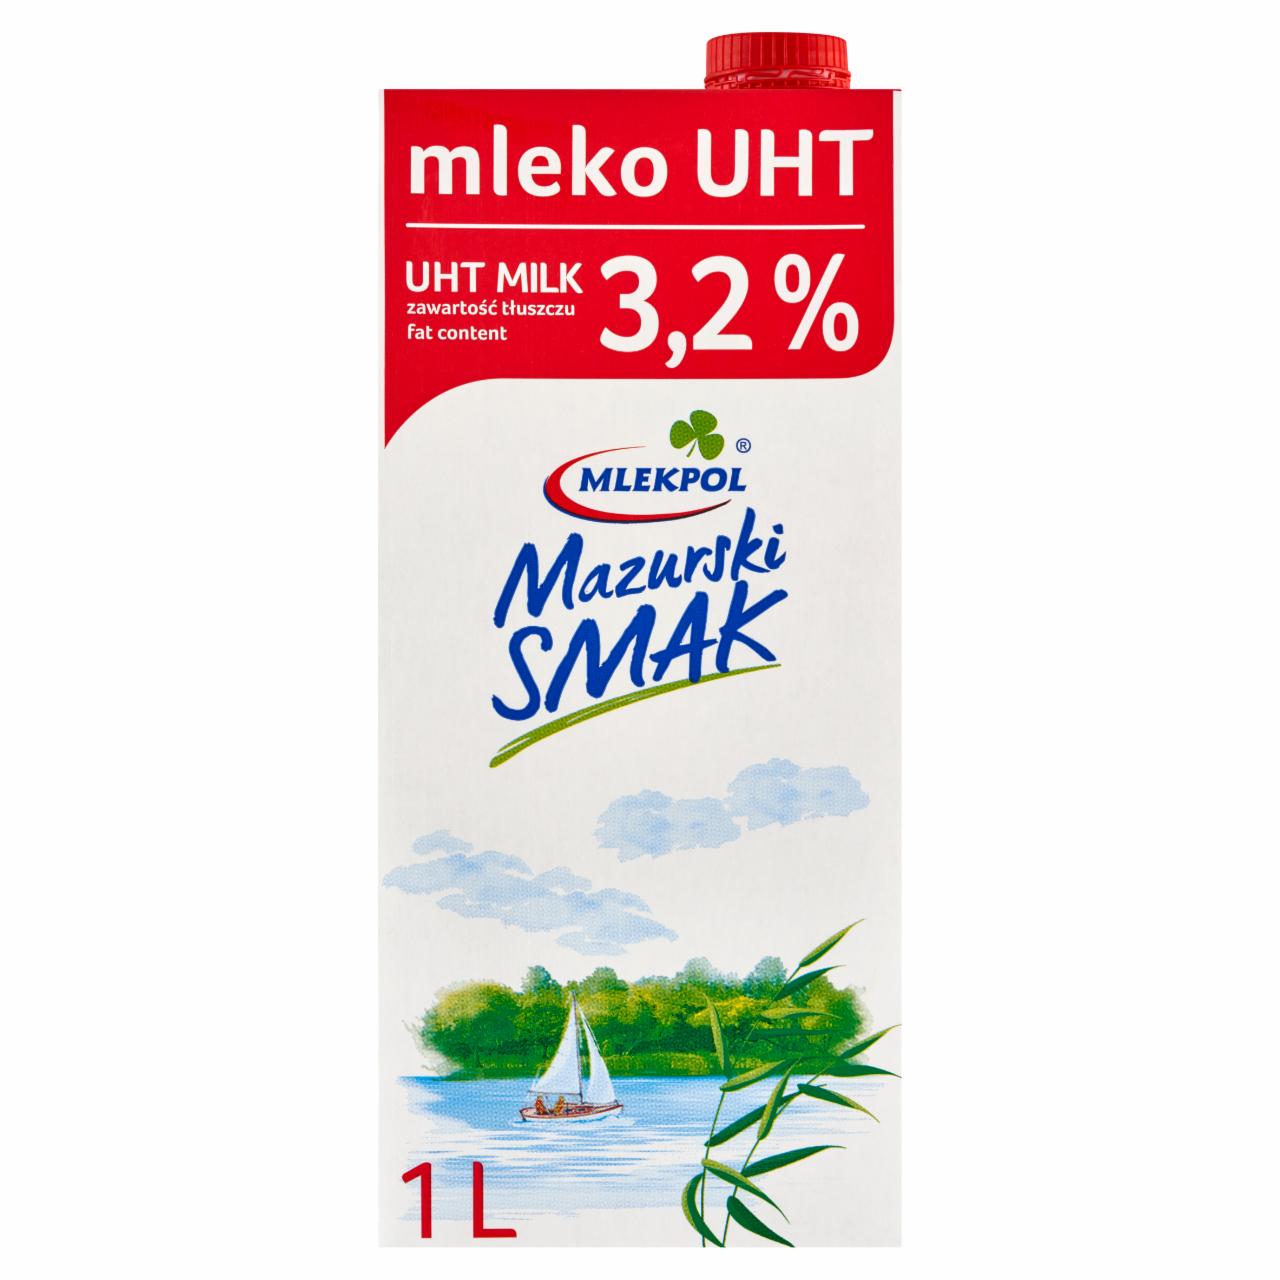 Zdjęcia - Mlekpol Mazurski Smak Mleko 3,2 % 1 l